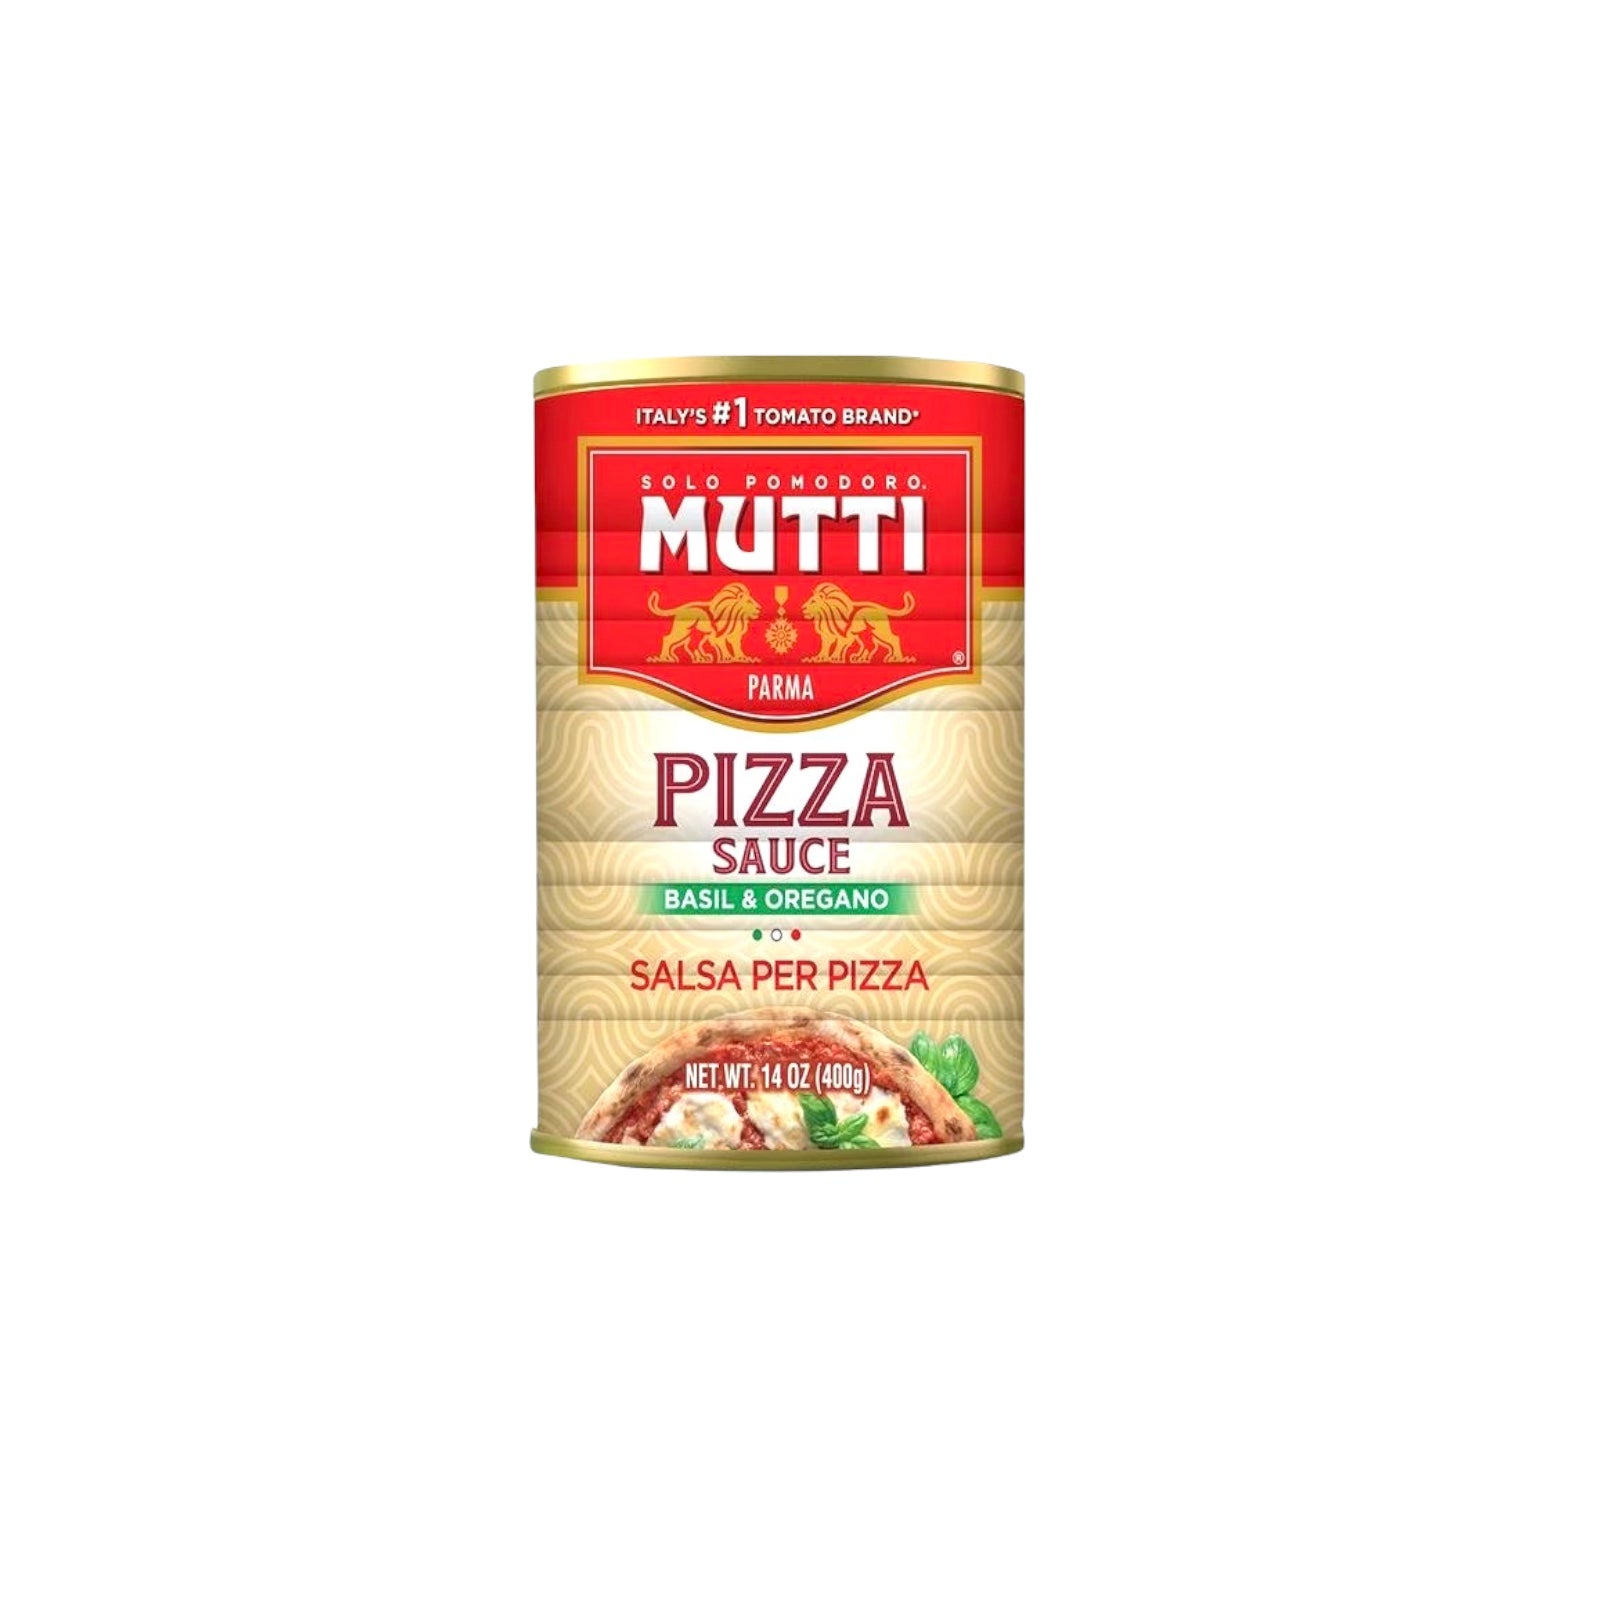 Mutti Pizza Sauce Basil & Oregano 14 oz